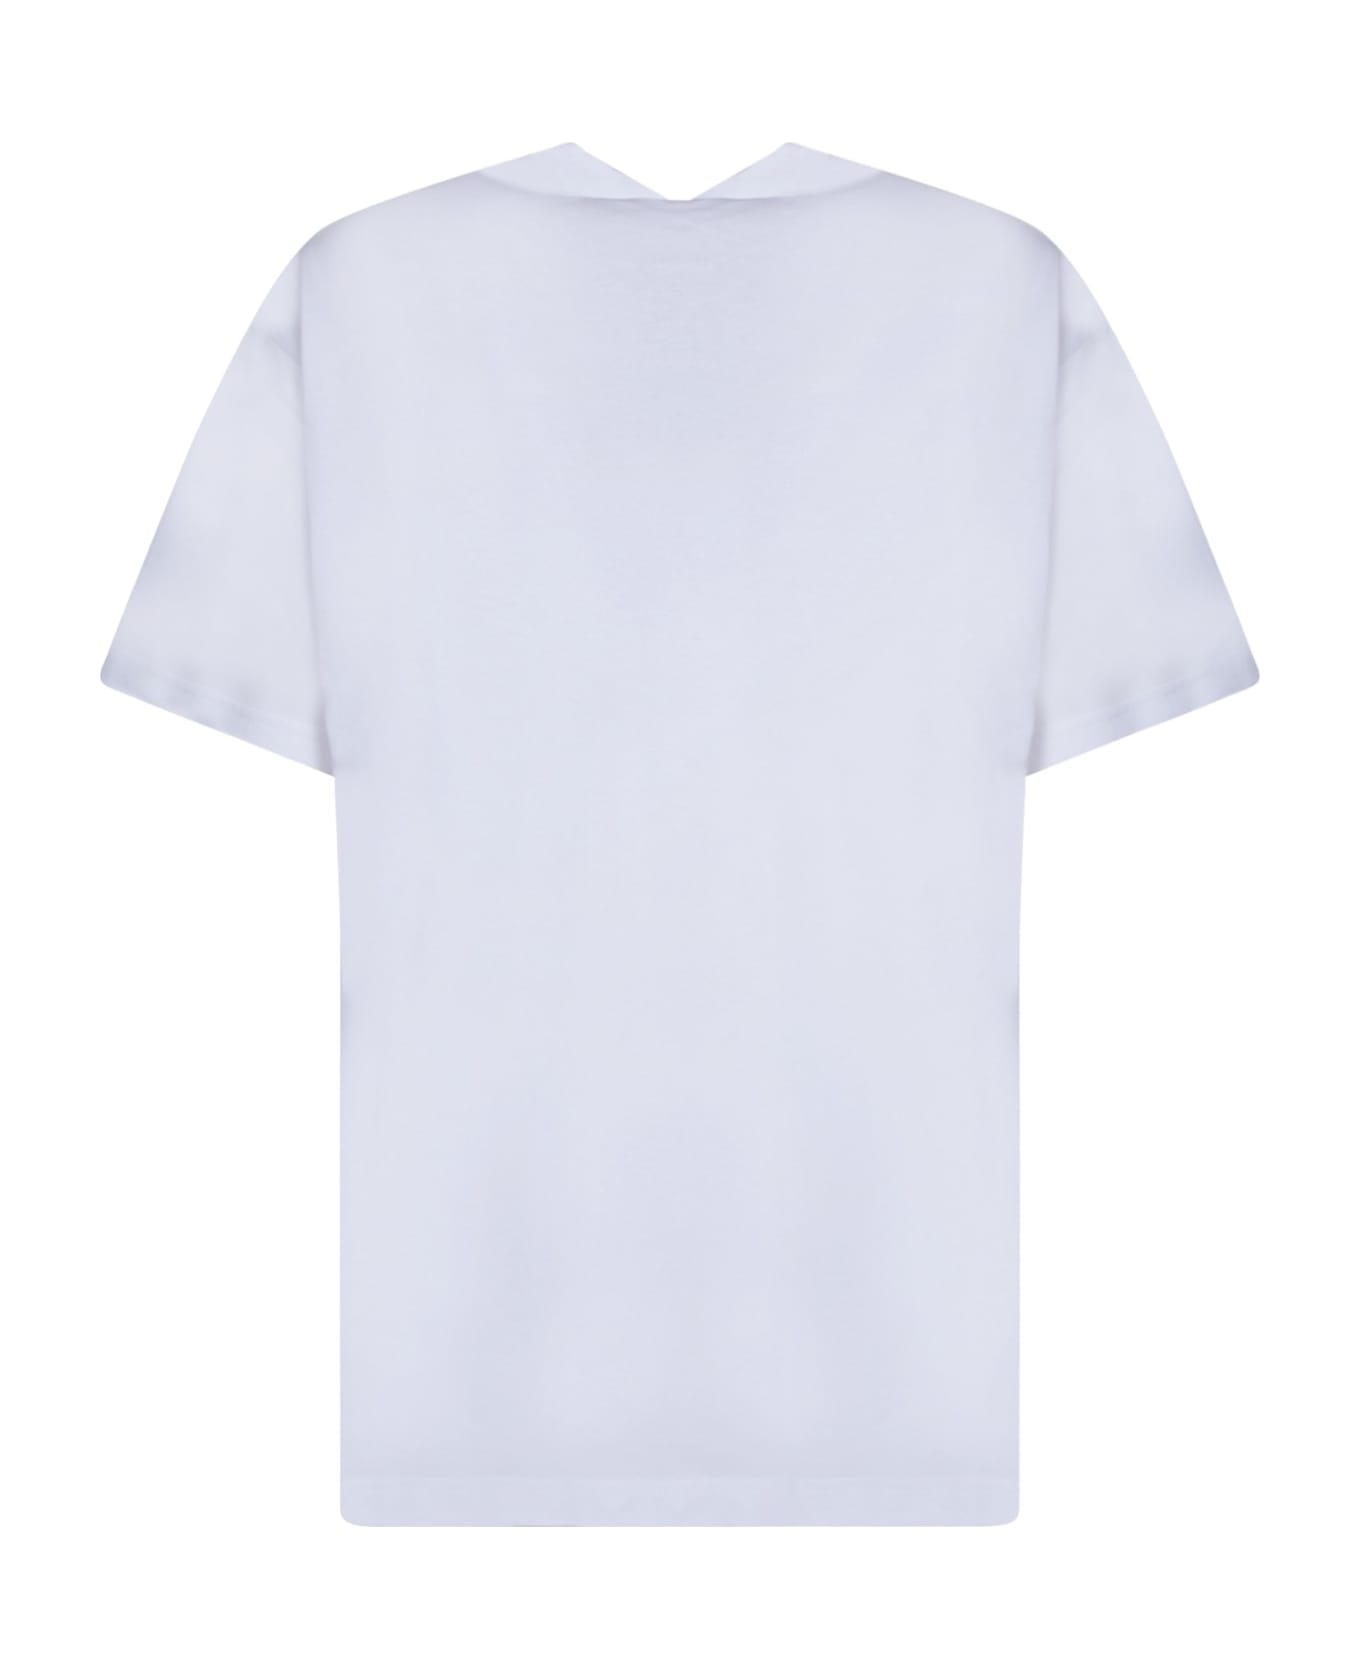 Fuct Oval Pee Girl White T-shirt - White